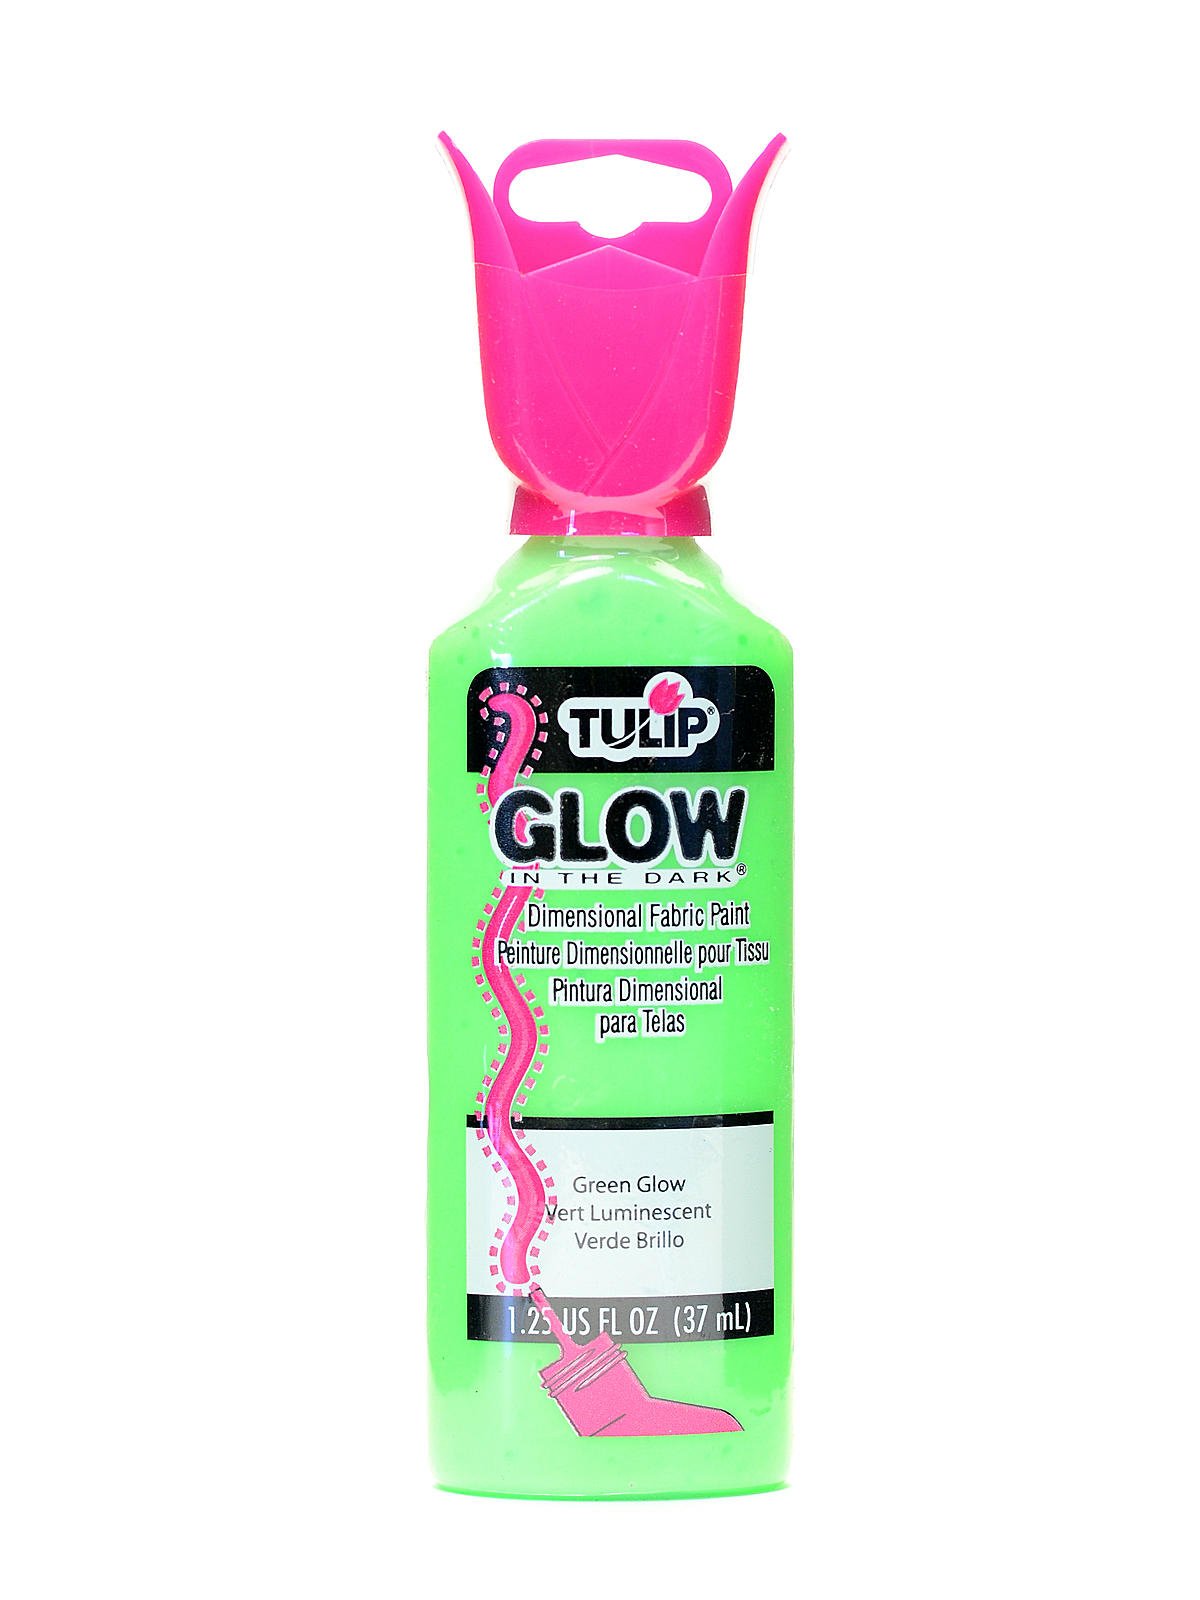 Tulip Glow-in-the-Dark Nontoxic Fabric Paint - 6 count, 1.25 fl oz tubes